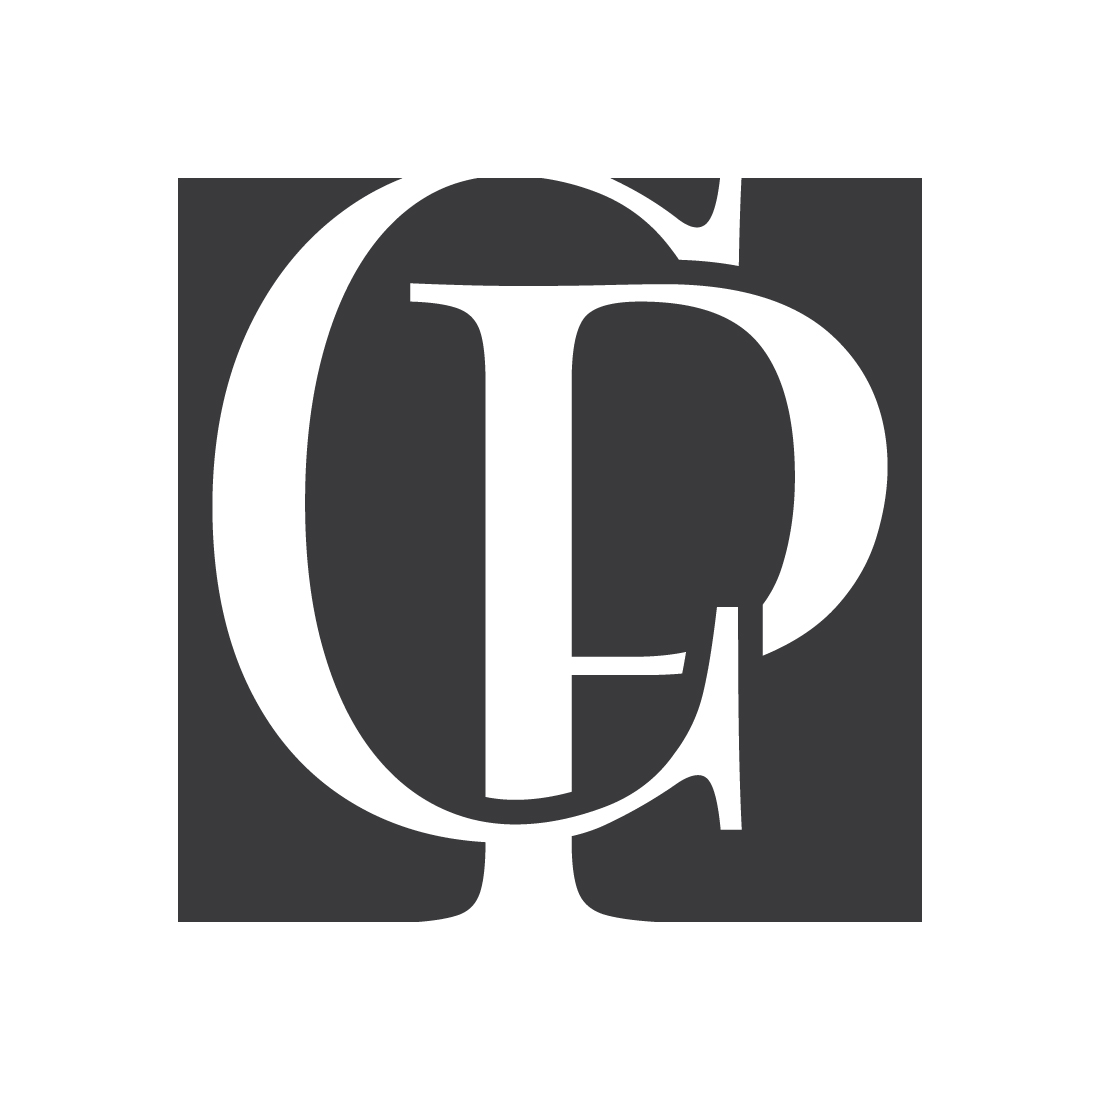 CP Logo PNG Transparent & SVG Vector - Freebie Supply